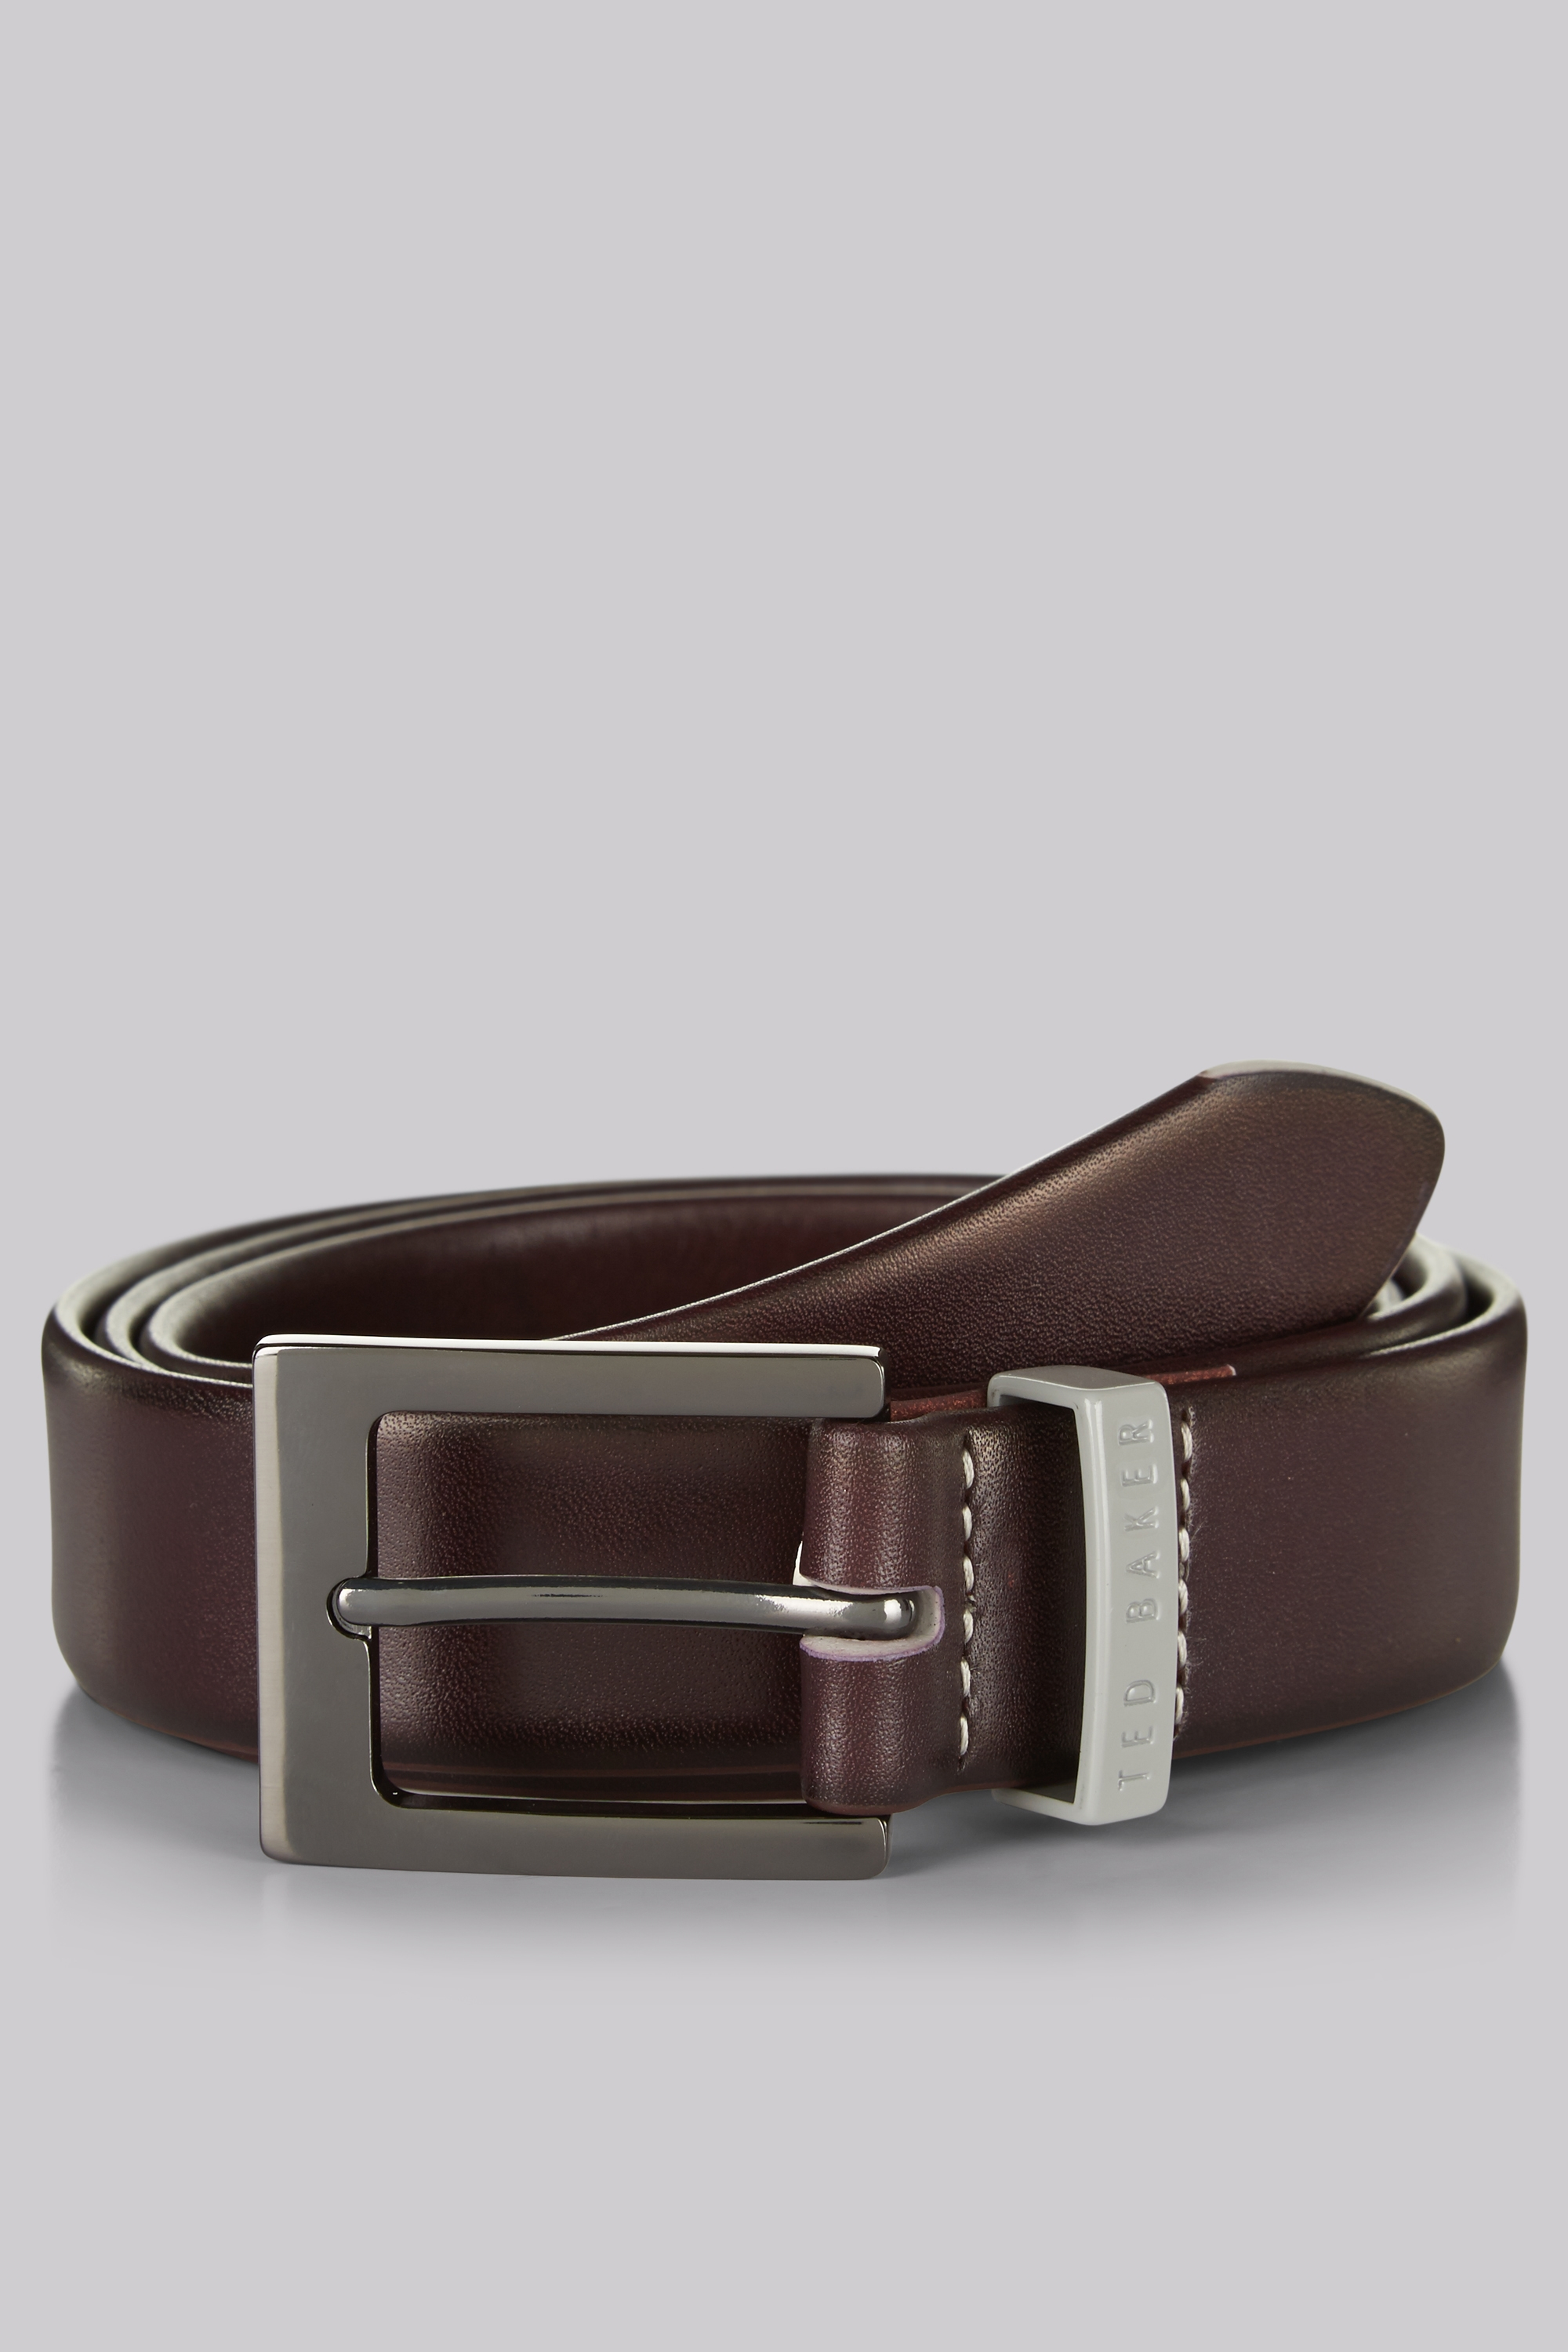 Ted Baker Oxblood Leather Belt in Brown for Men - Lyst